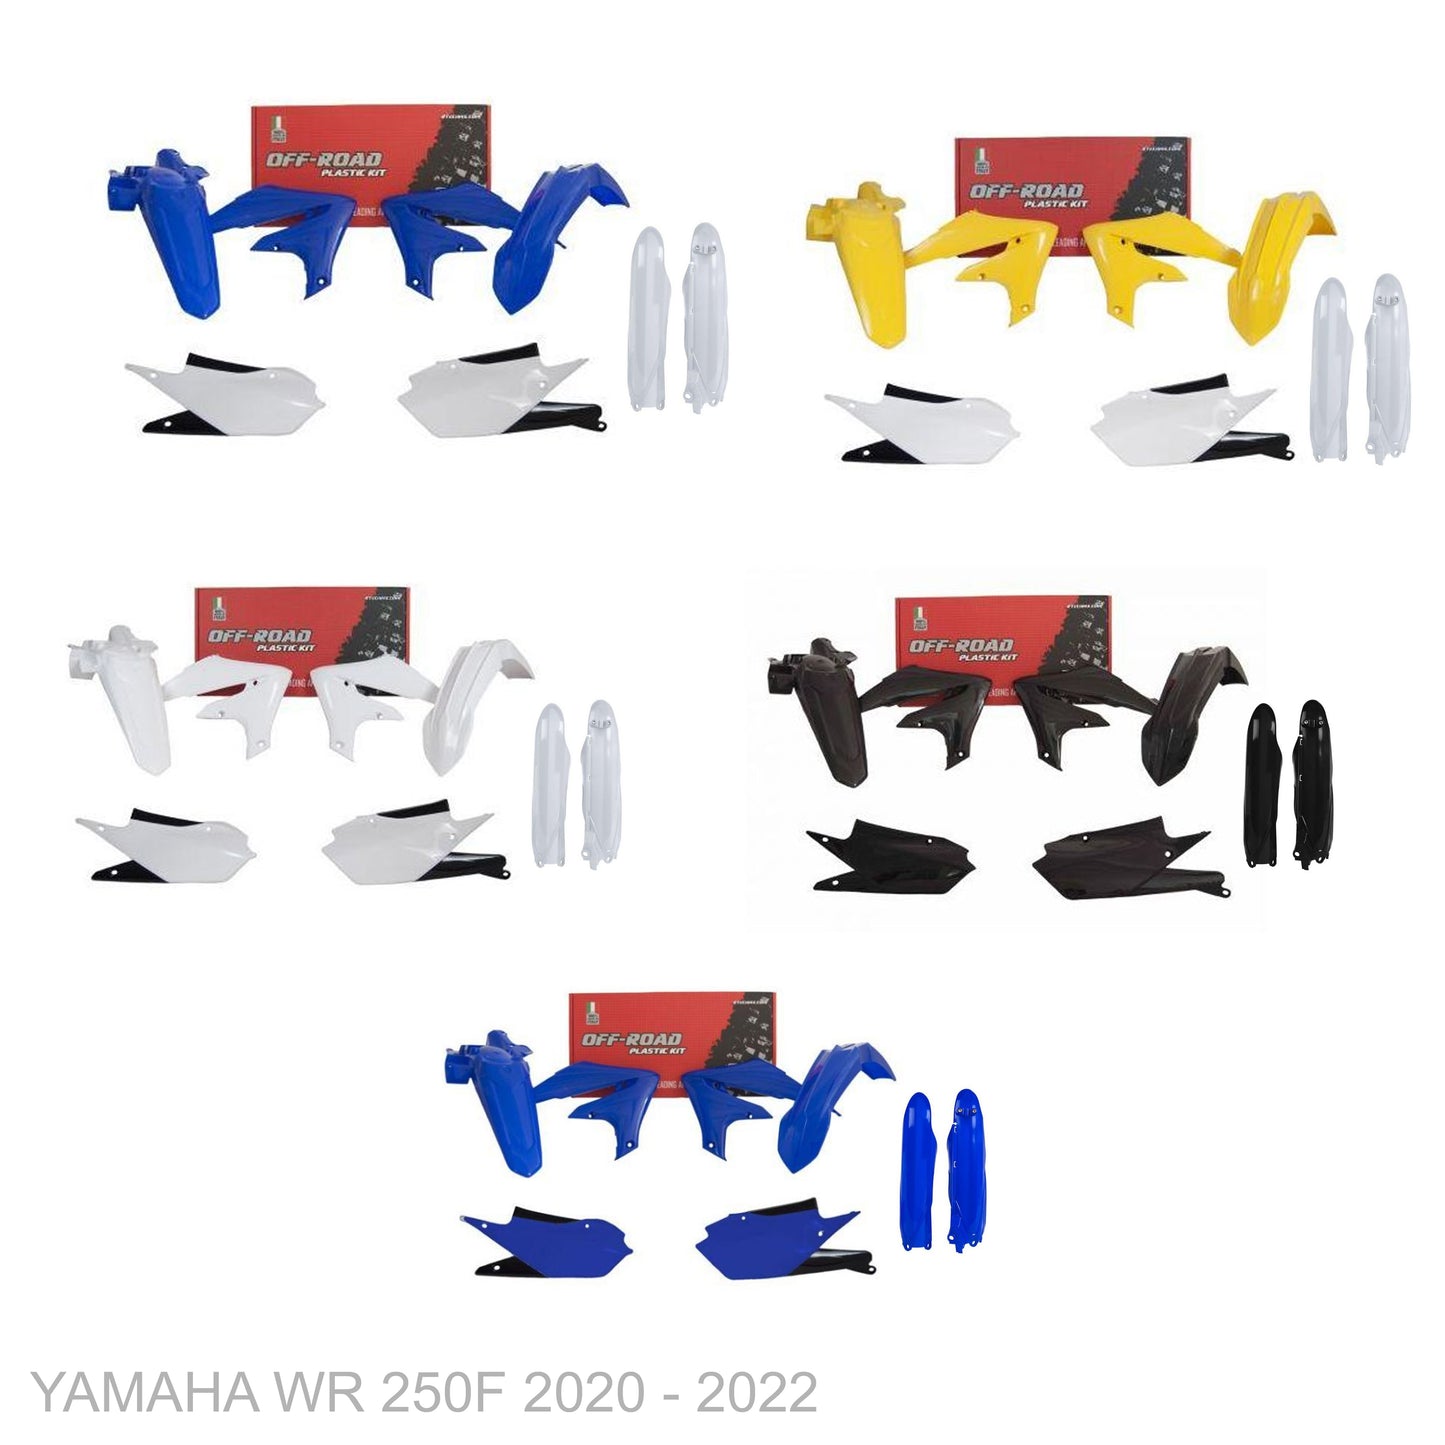 YAMAHA WR 250F 2020 - 2022 Start From Scratch Graphics Kits